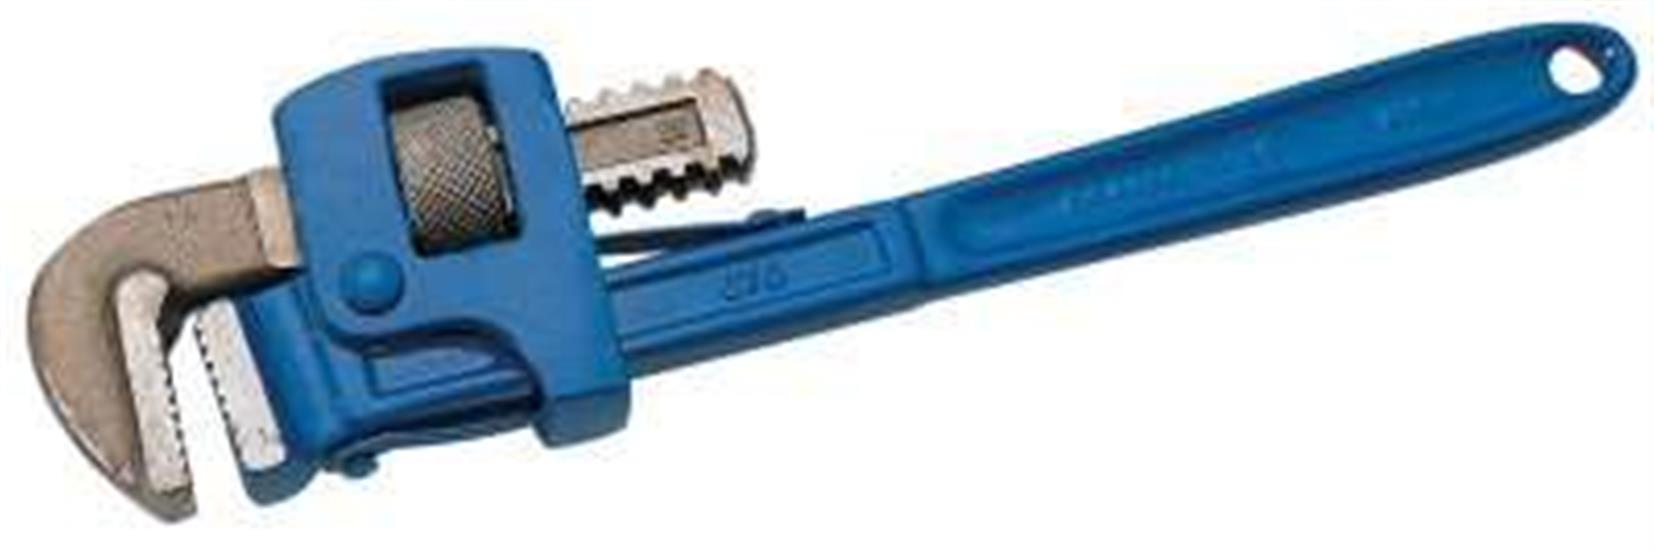 Draper 17225 𨙶) - 600mm Adjustable Pipe Wrench